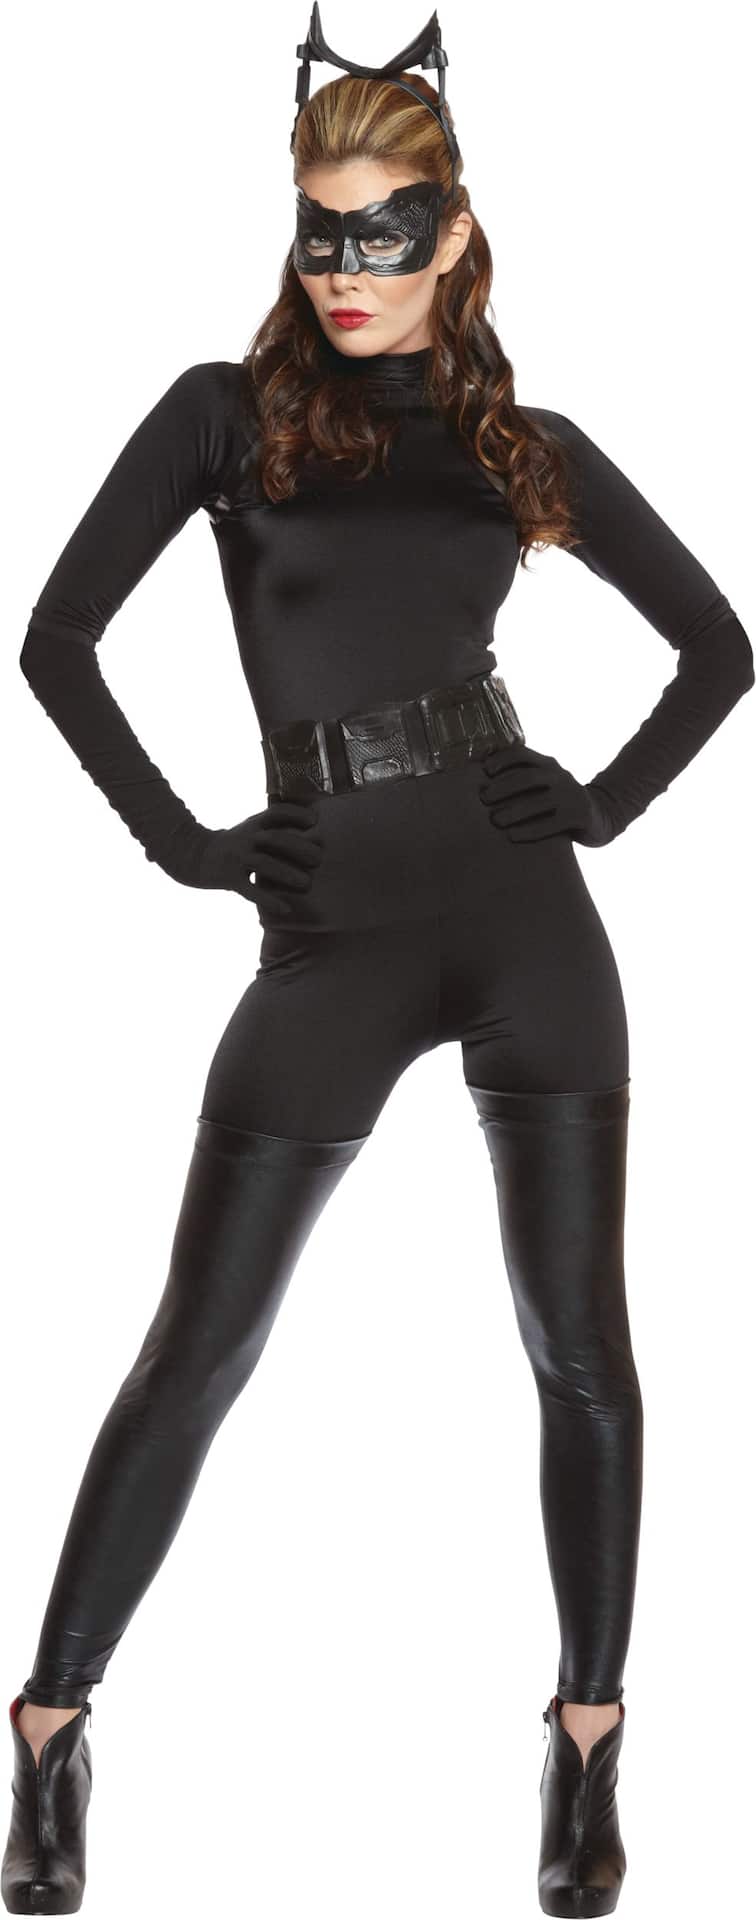 Powerful Black Superhero Halloween Costume